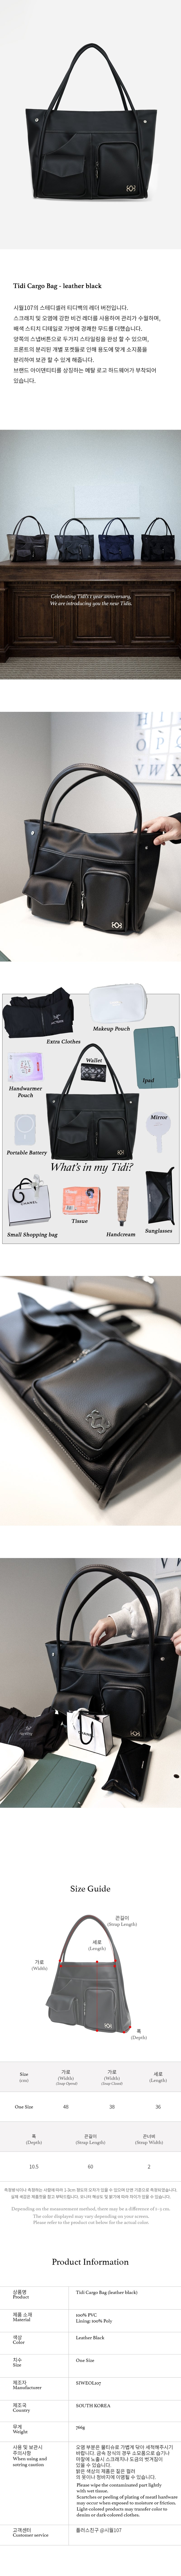 tidi cargo bag (leather black)